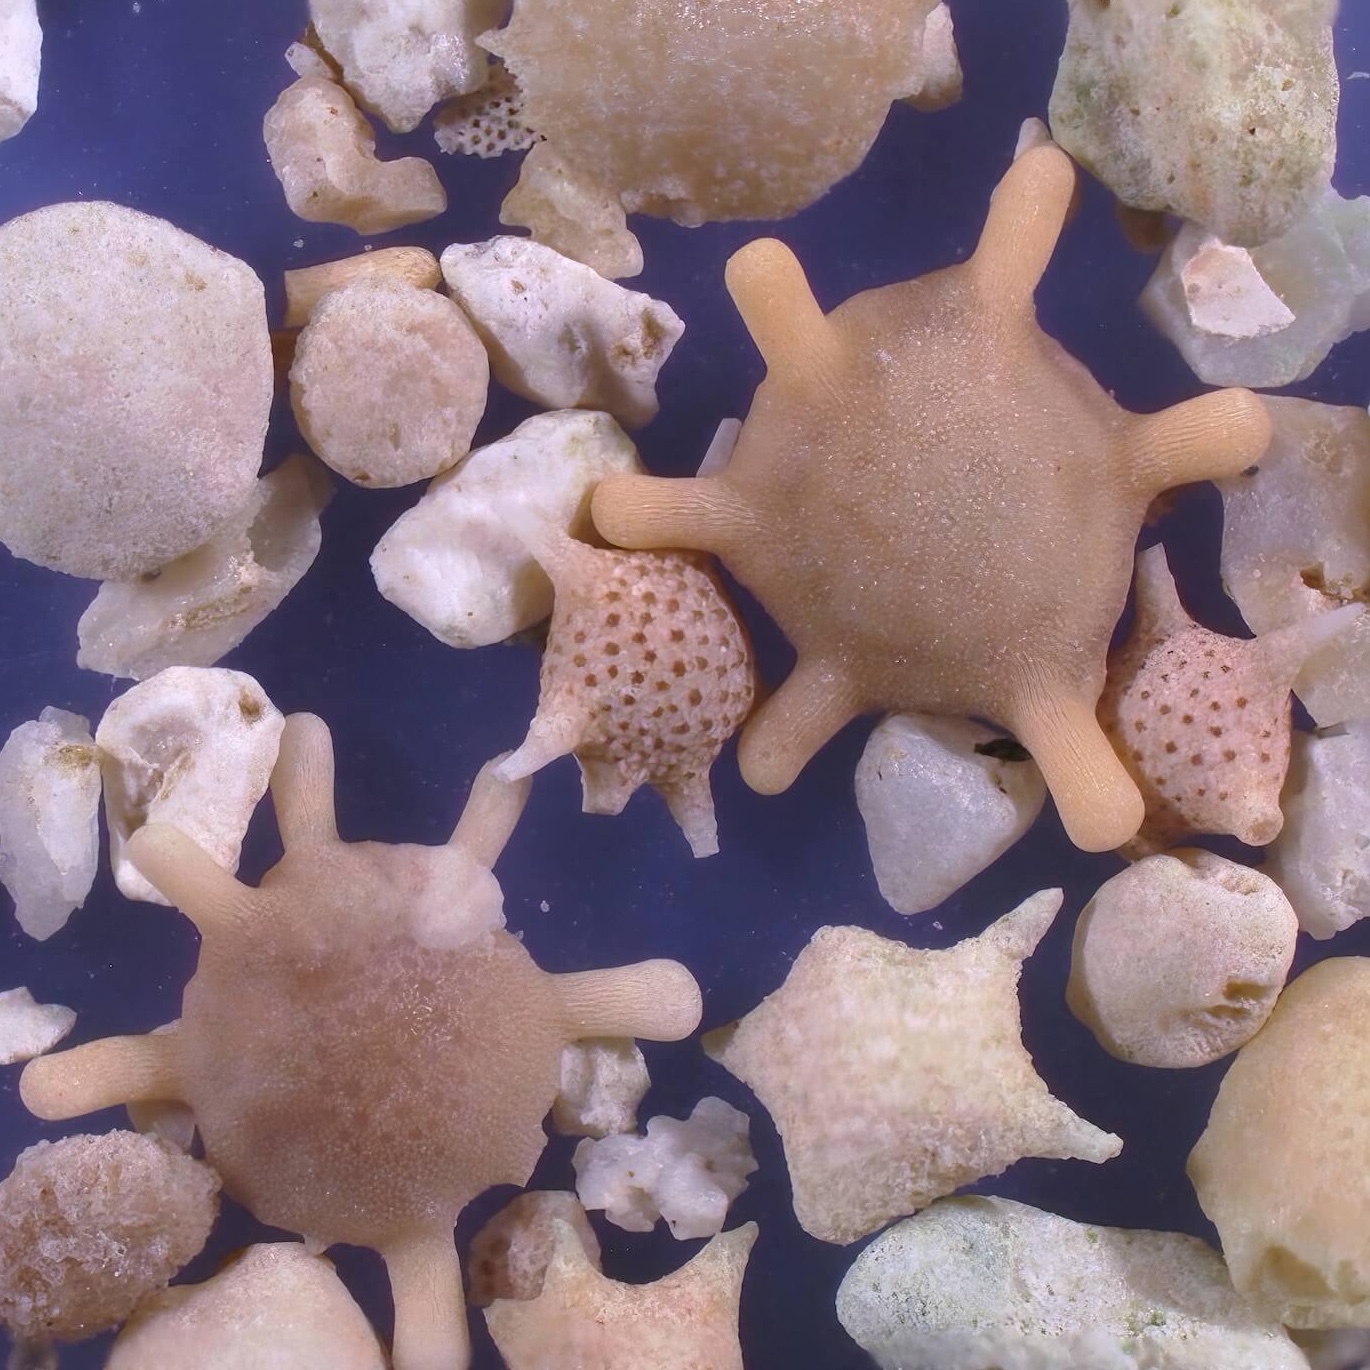 Sq1 Minami Beach Hateruma Island Taketomi Okinawa Sand Grains Magnified Under Microscope 3